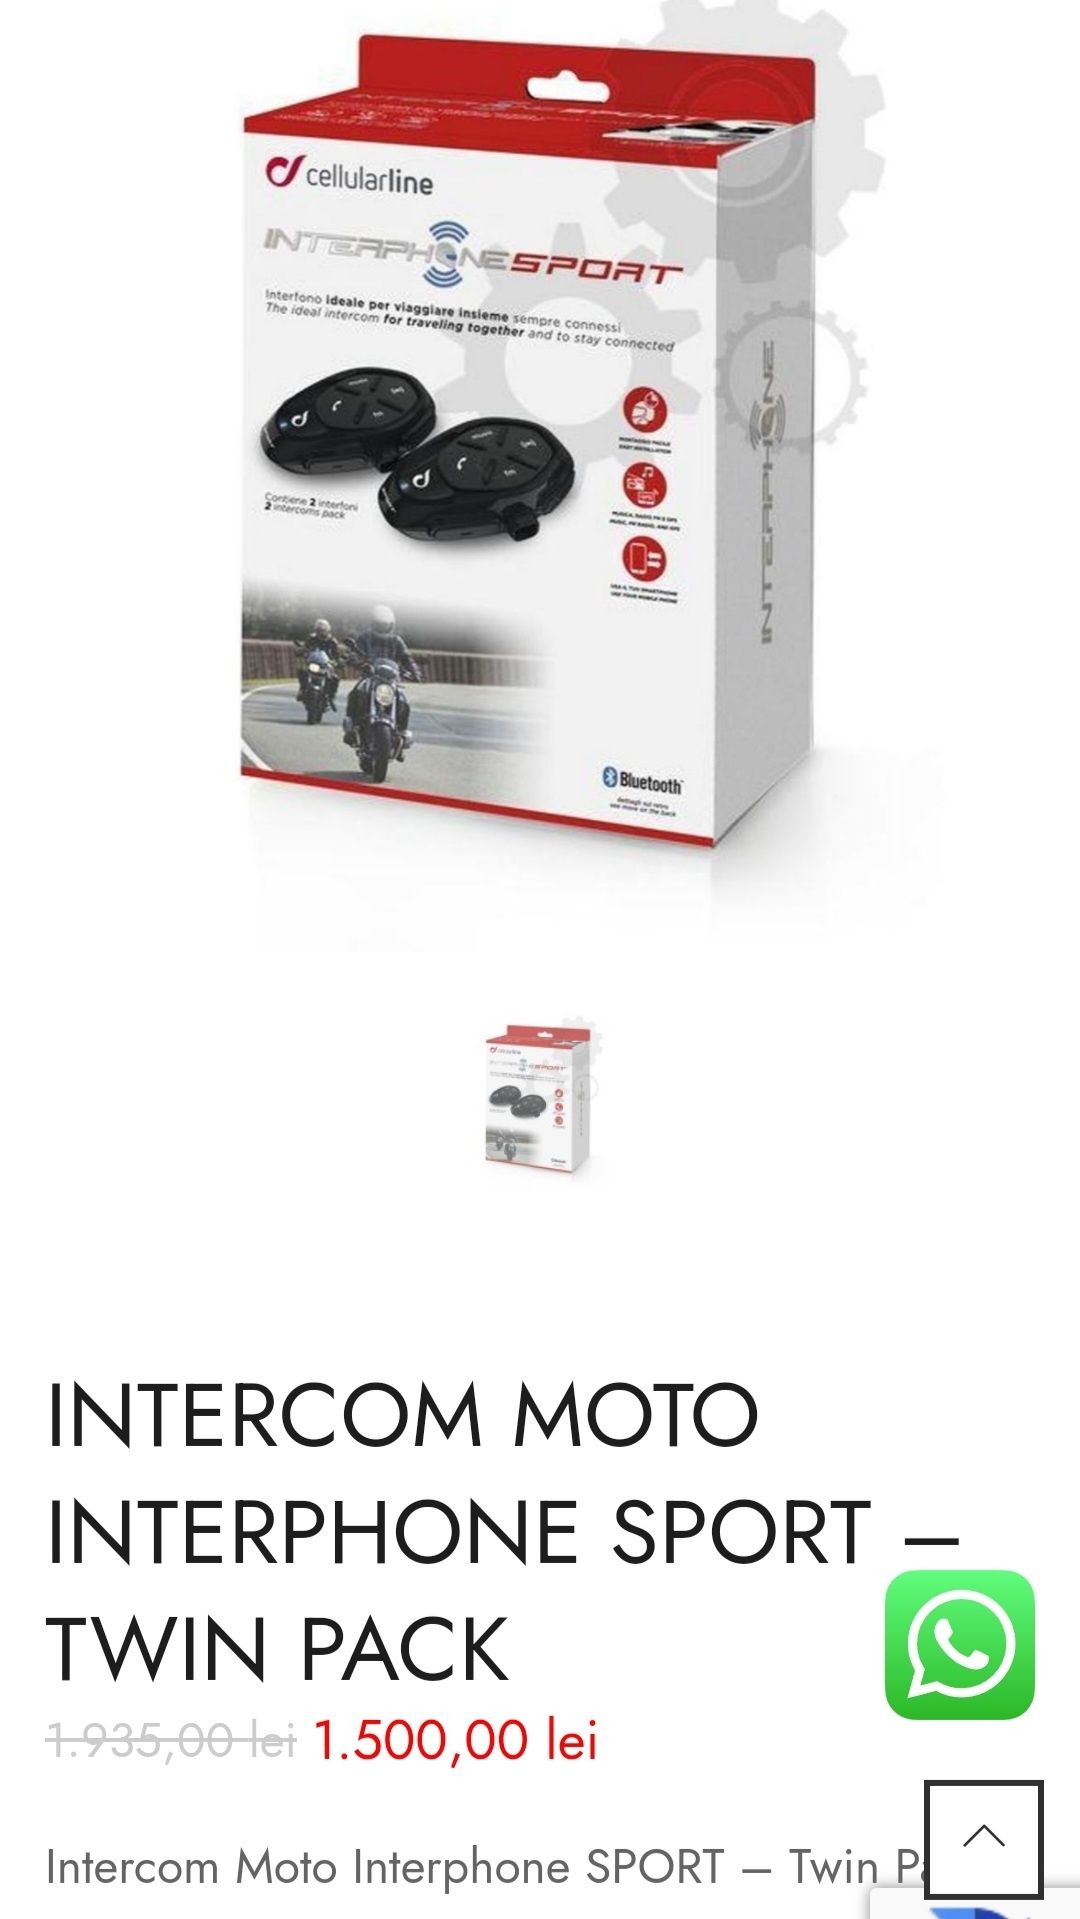 INTERCOM Moto Interphone Sport – TWIN PACK